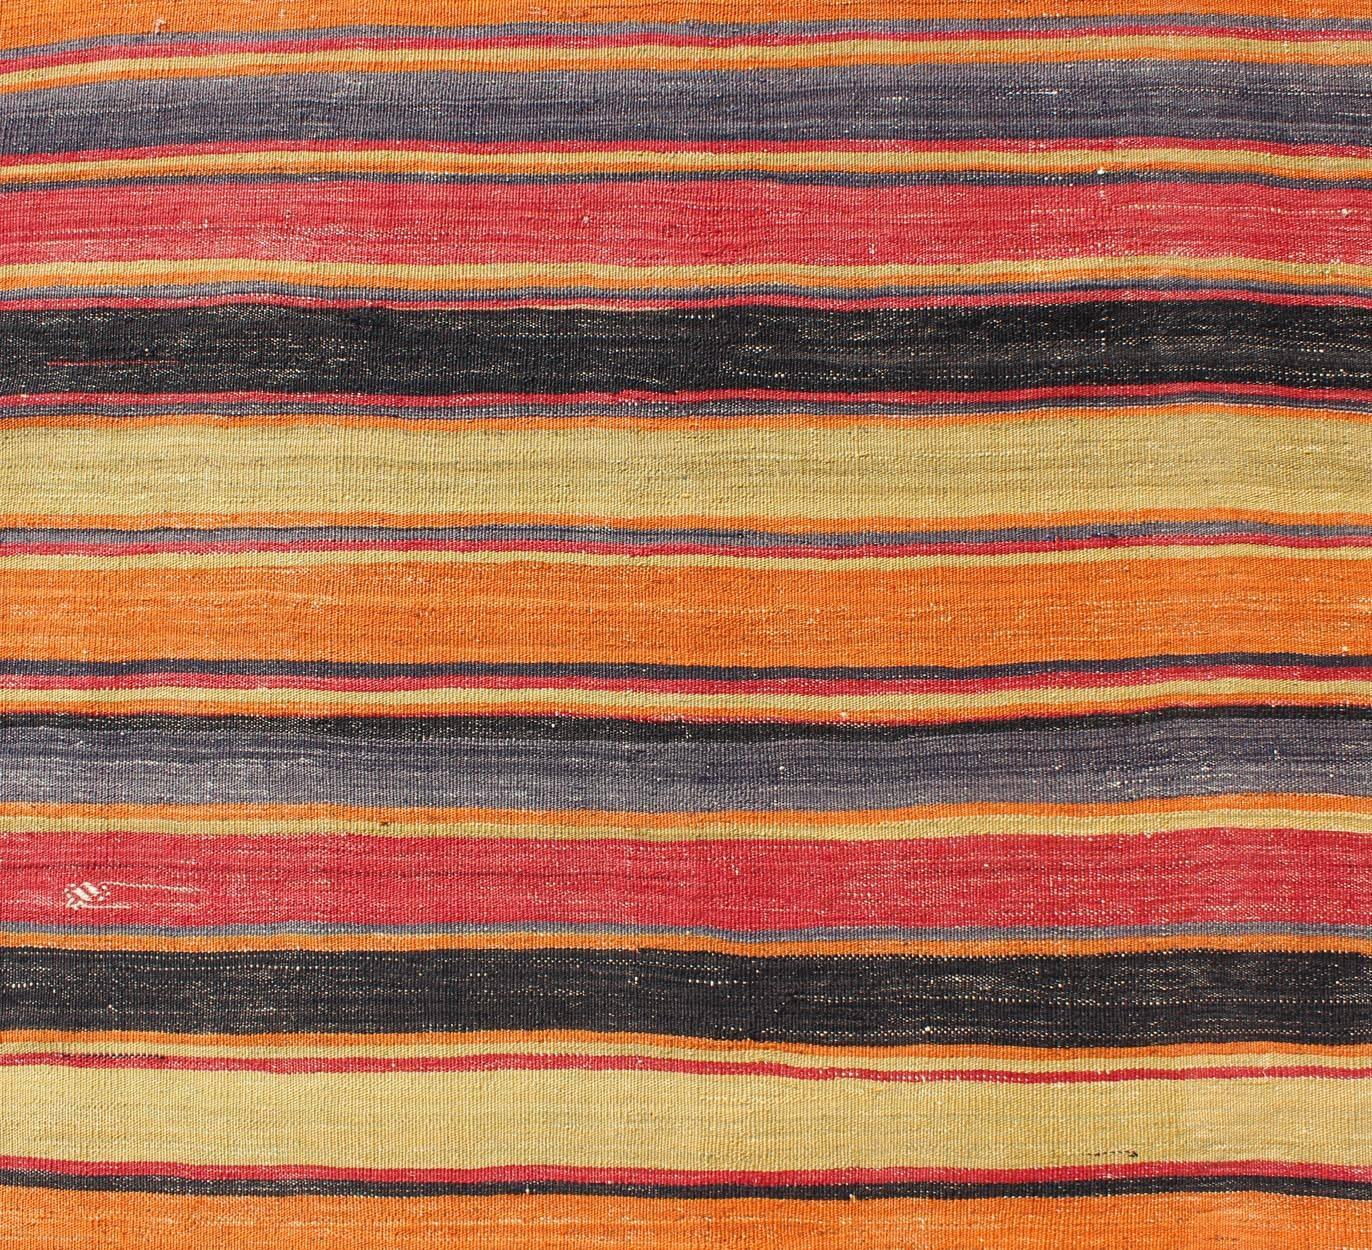 20th Century Multicolored Vintage Turkish Kilim Rug with Horizontal Stripe Design For Sale